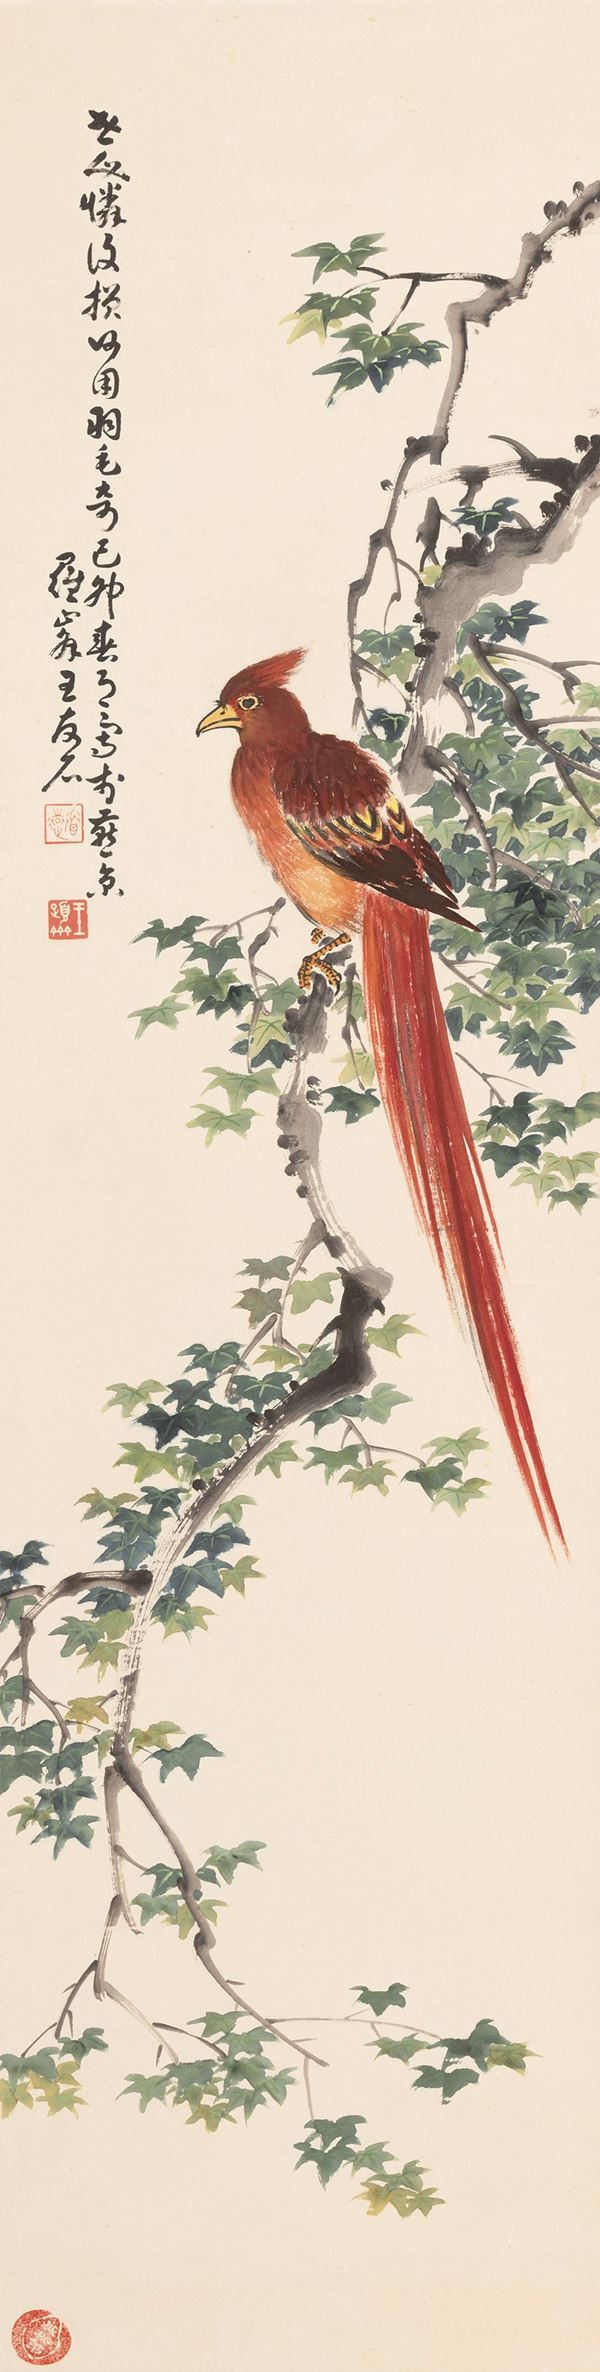 Scroll su carta titolato "Fiori e uccelli", Wang Youshi, Cina, XX secolo